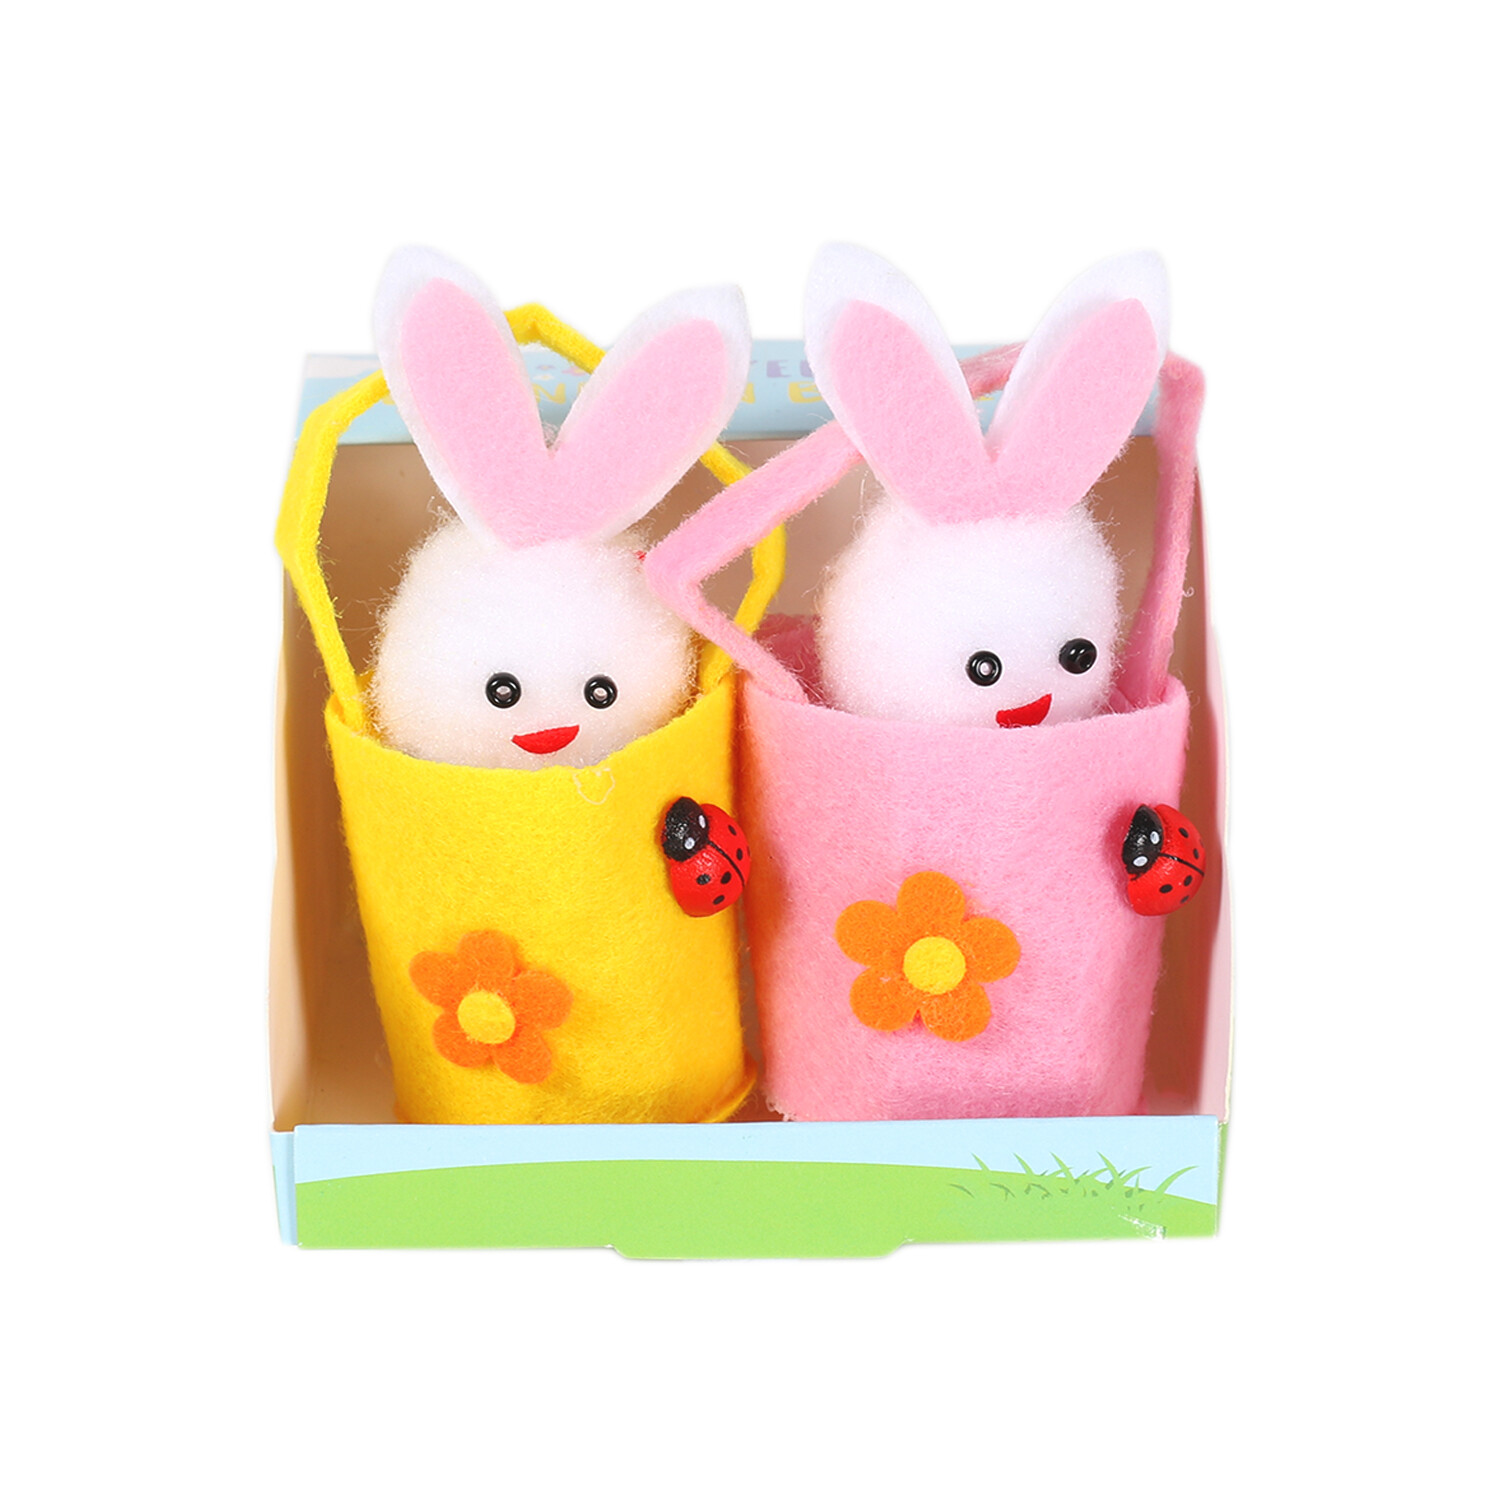 Two Bunnies In Felt Buckets Image 1